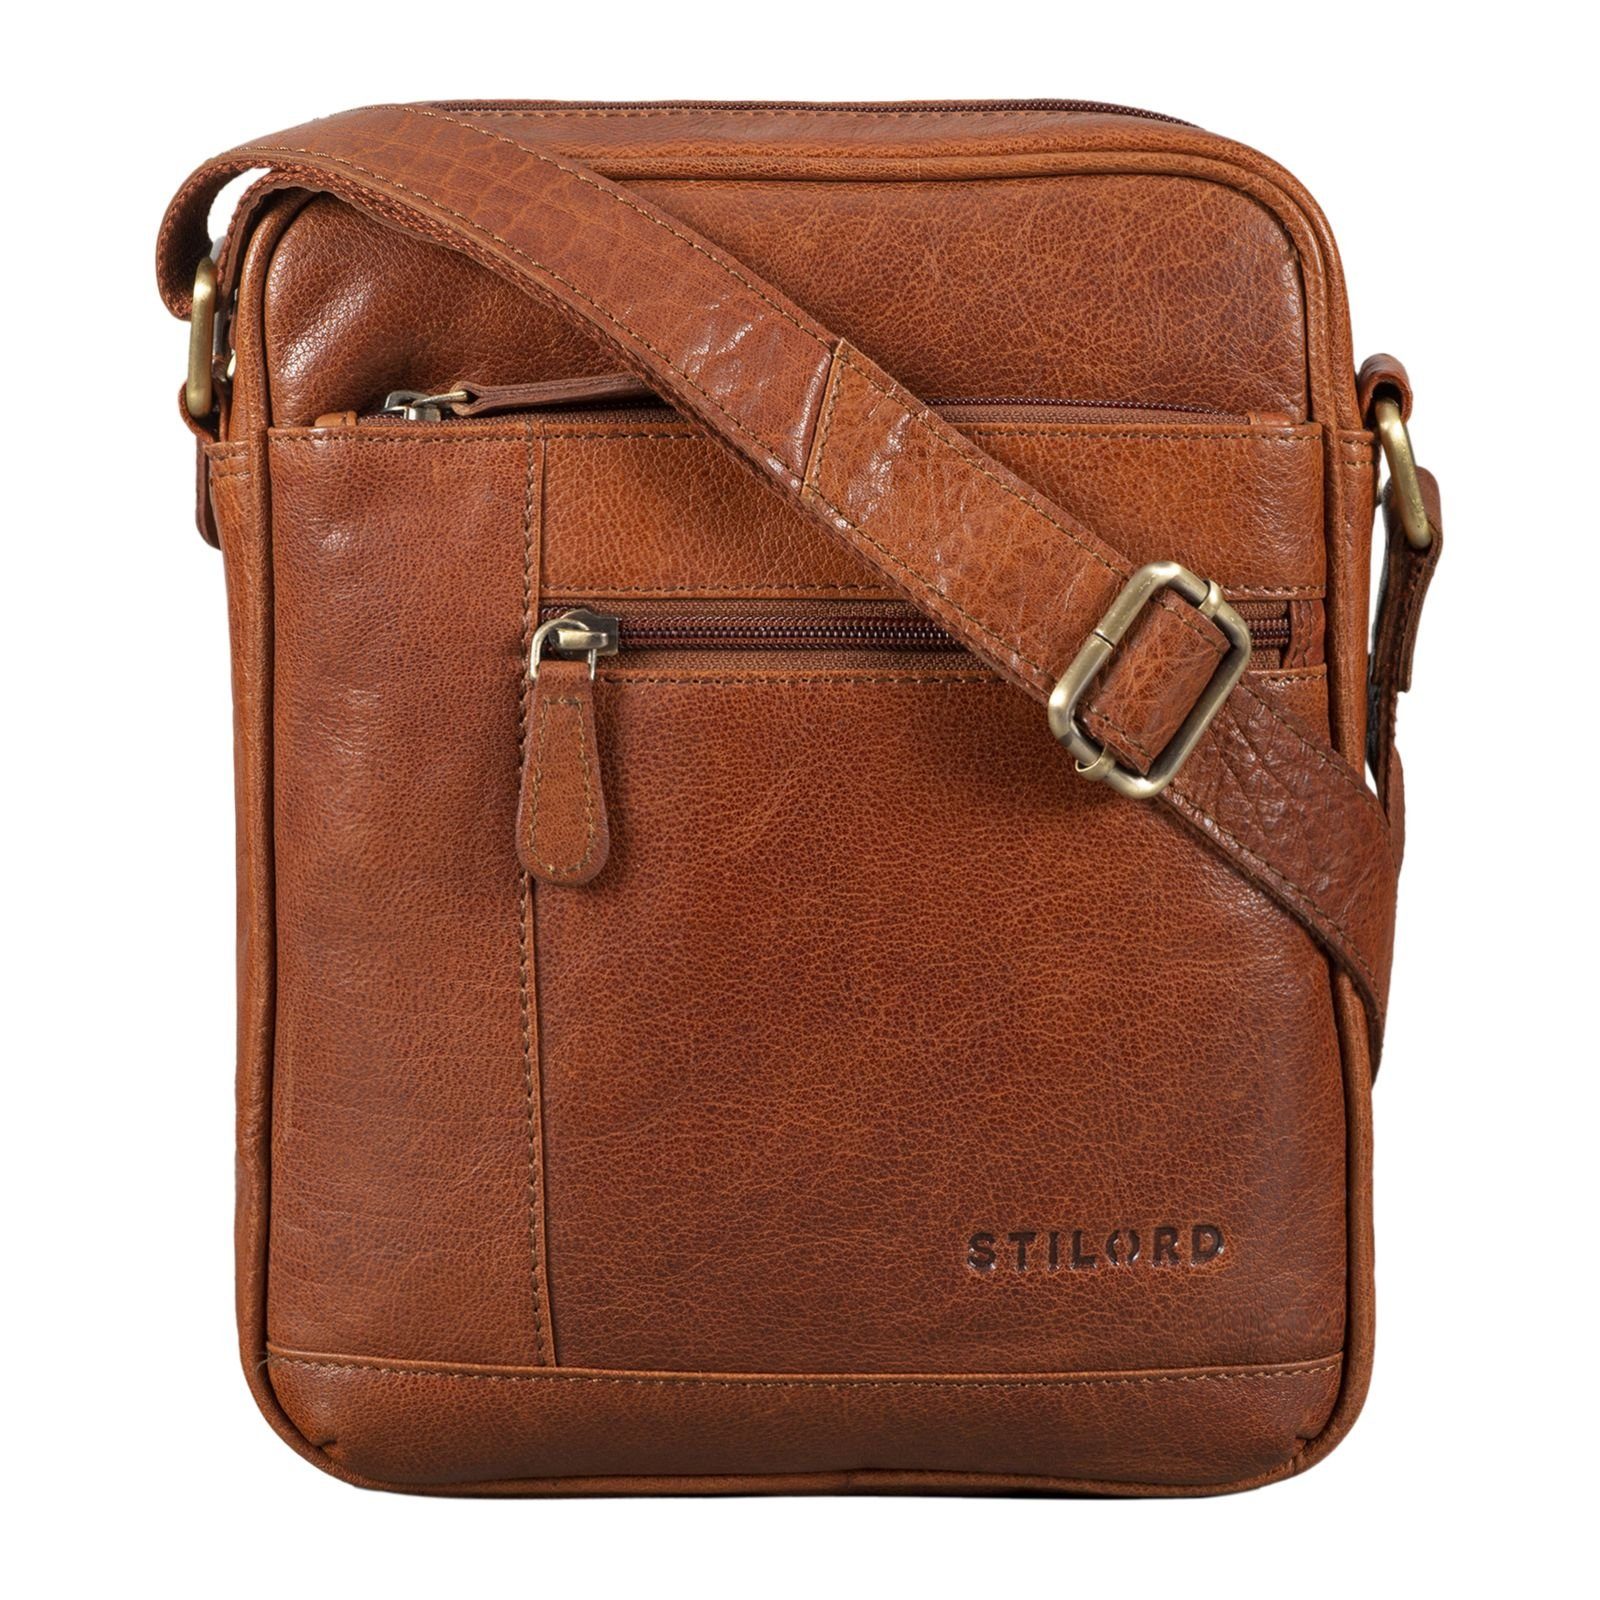 STILORD Messenger Bag "Diego" Vintage Herrentasche Leder klein maraska - braun